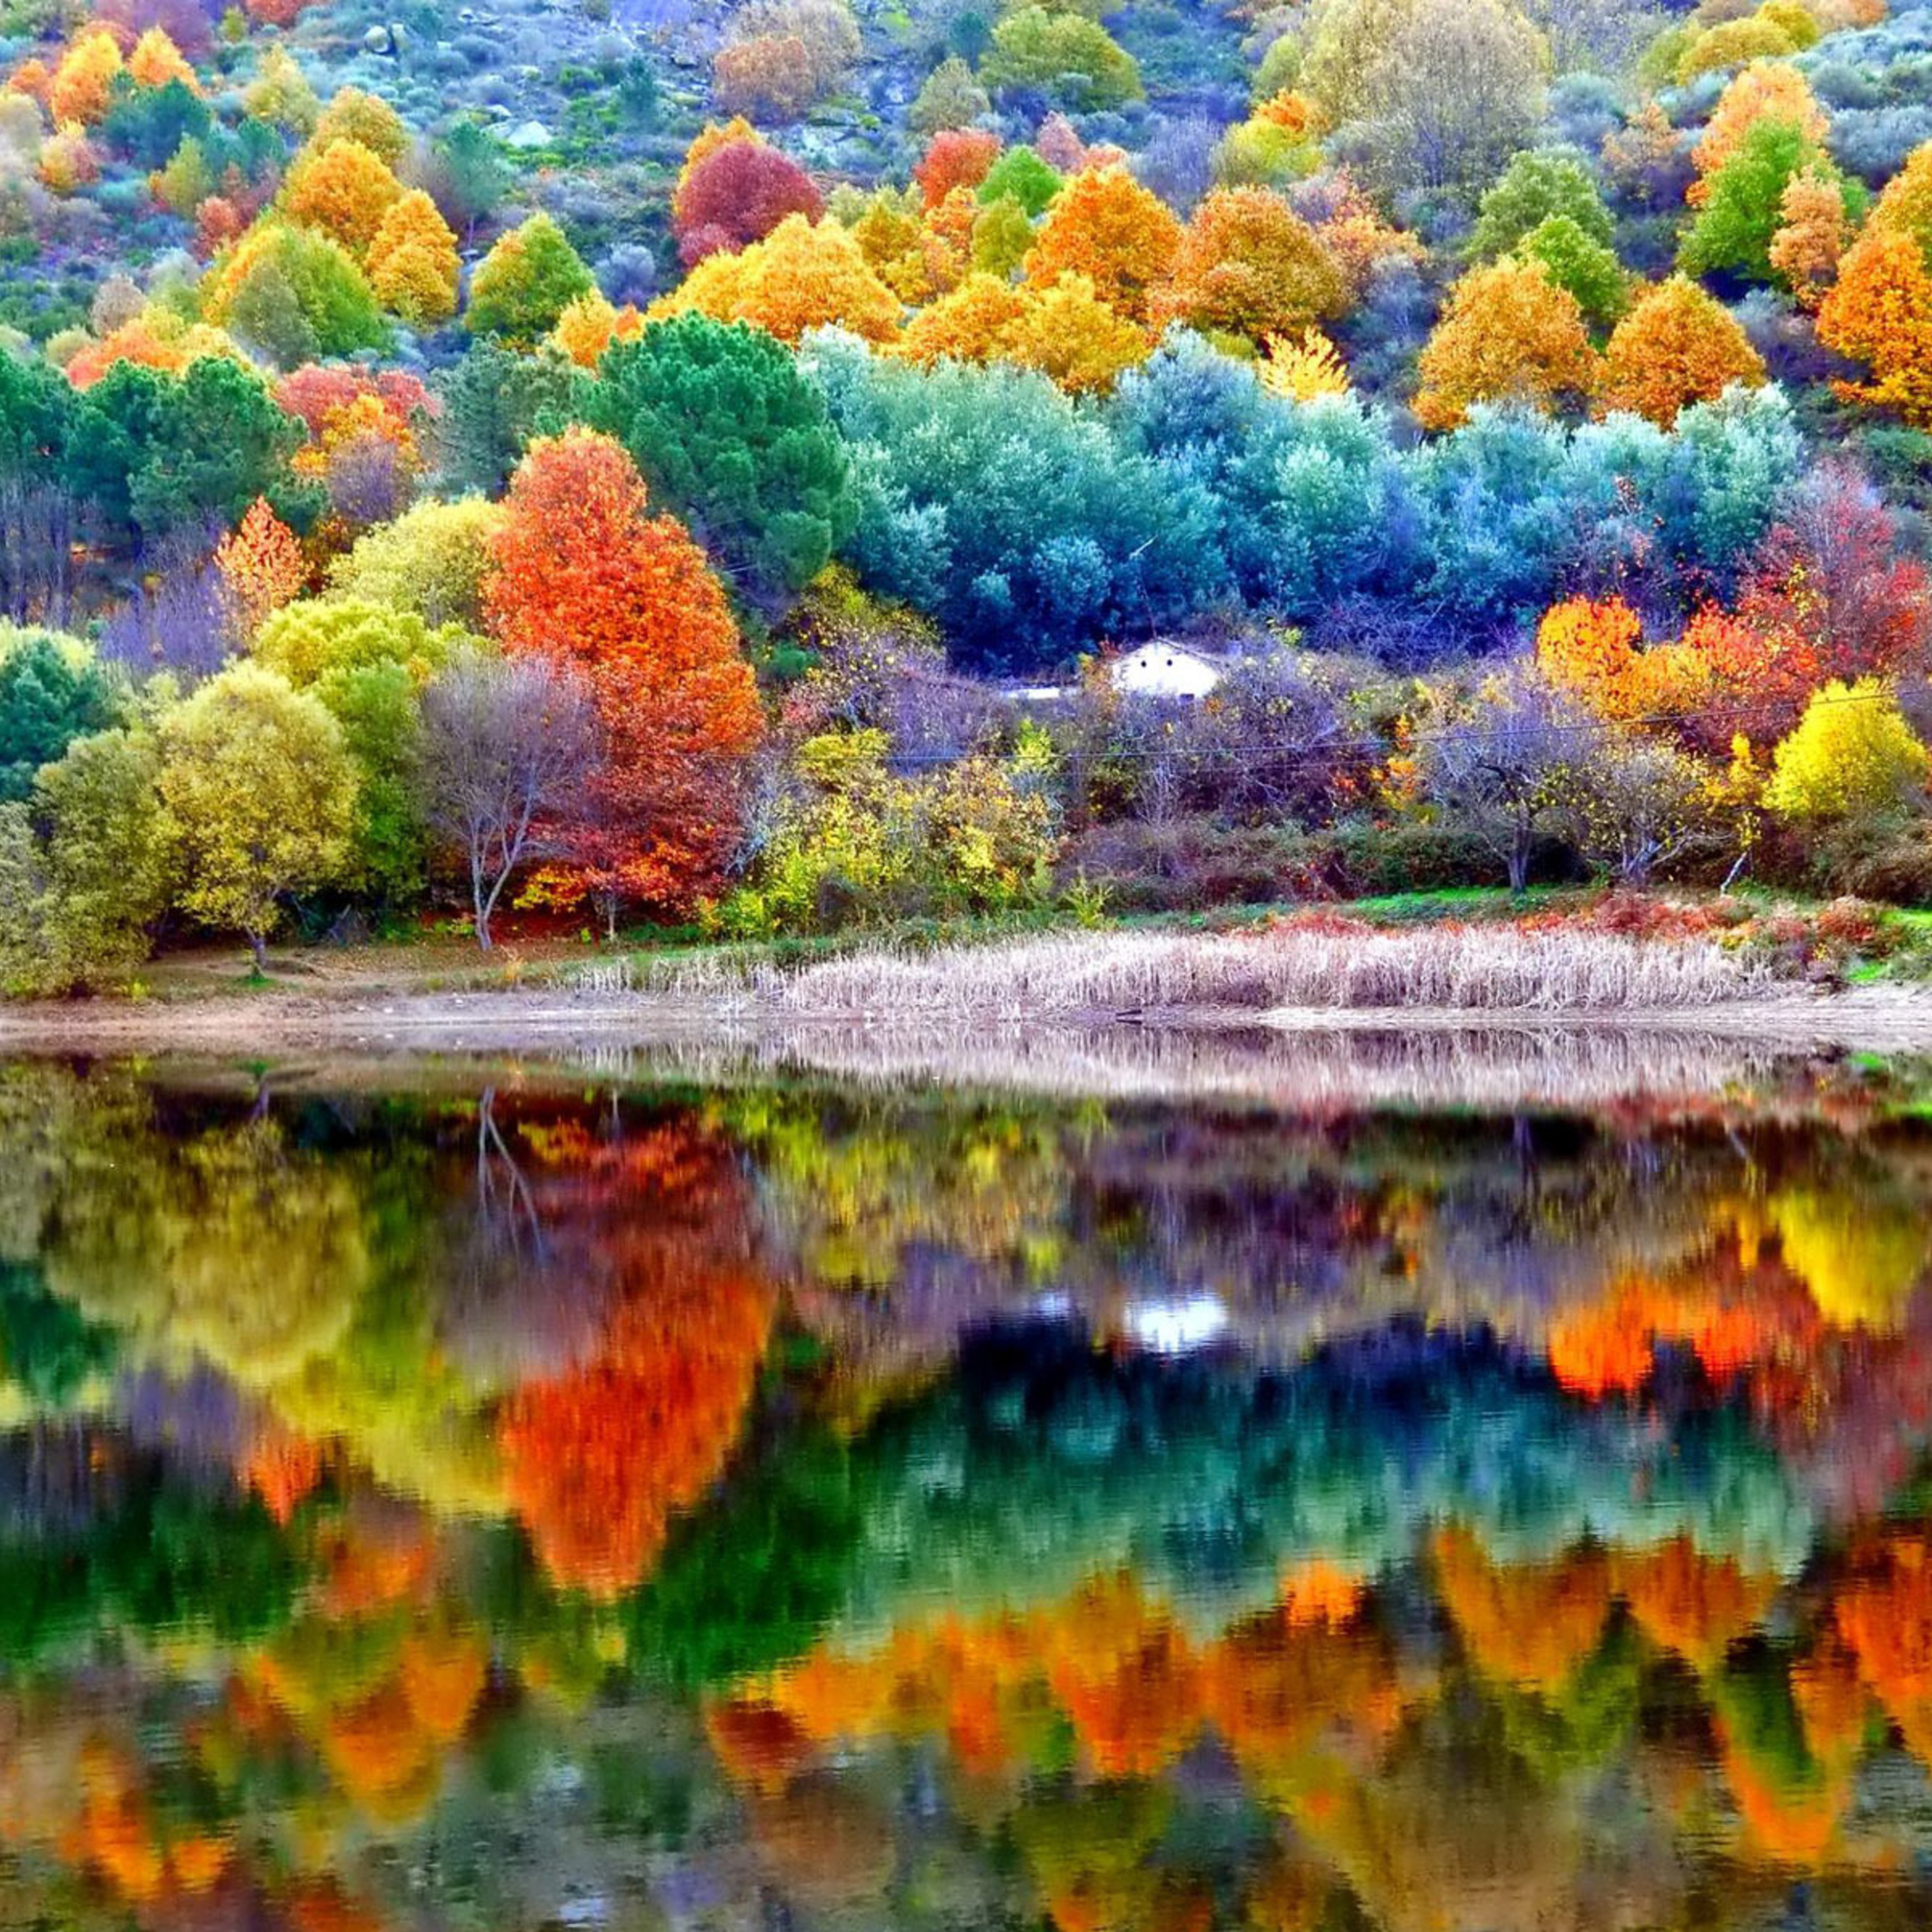 Autumn Scenery iPad Pro Retina Display HD 4k Wallpaper, Image, Background, Photo and Picture